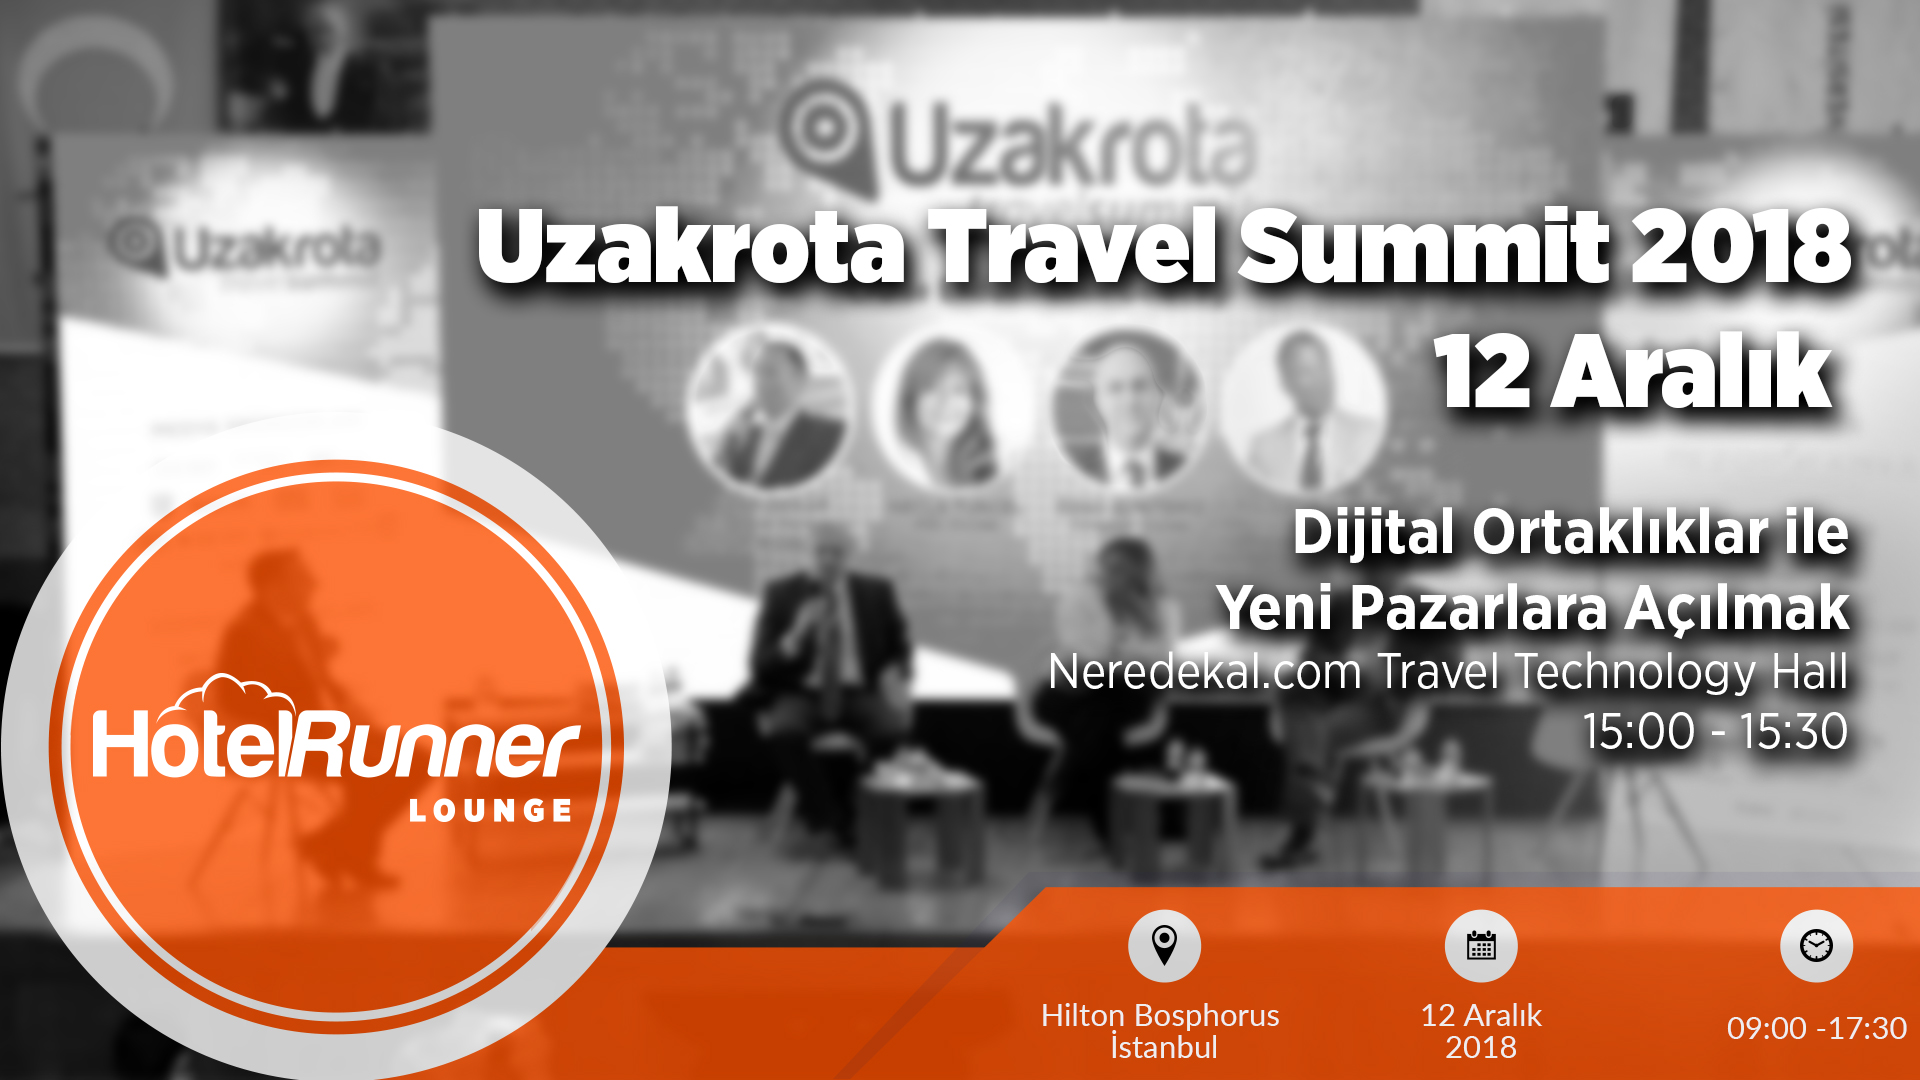 Turizm, teknoloji ve pazarlama ile ilgili her şey Uzakrota Travel Summit’te